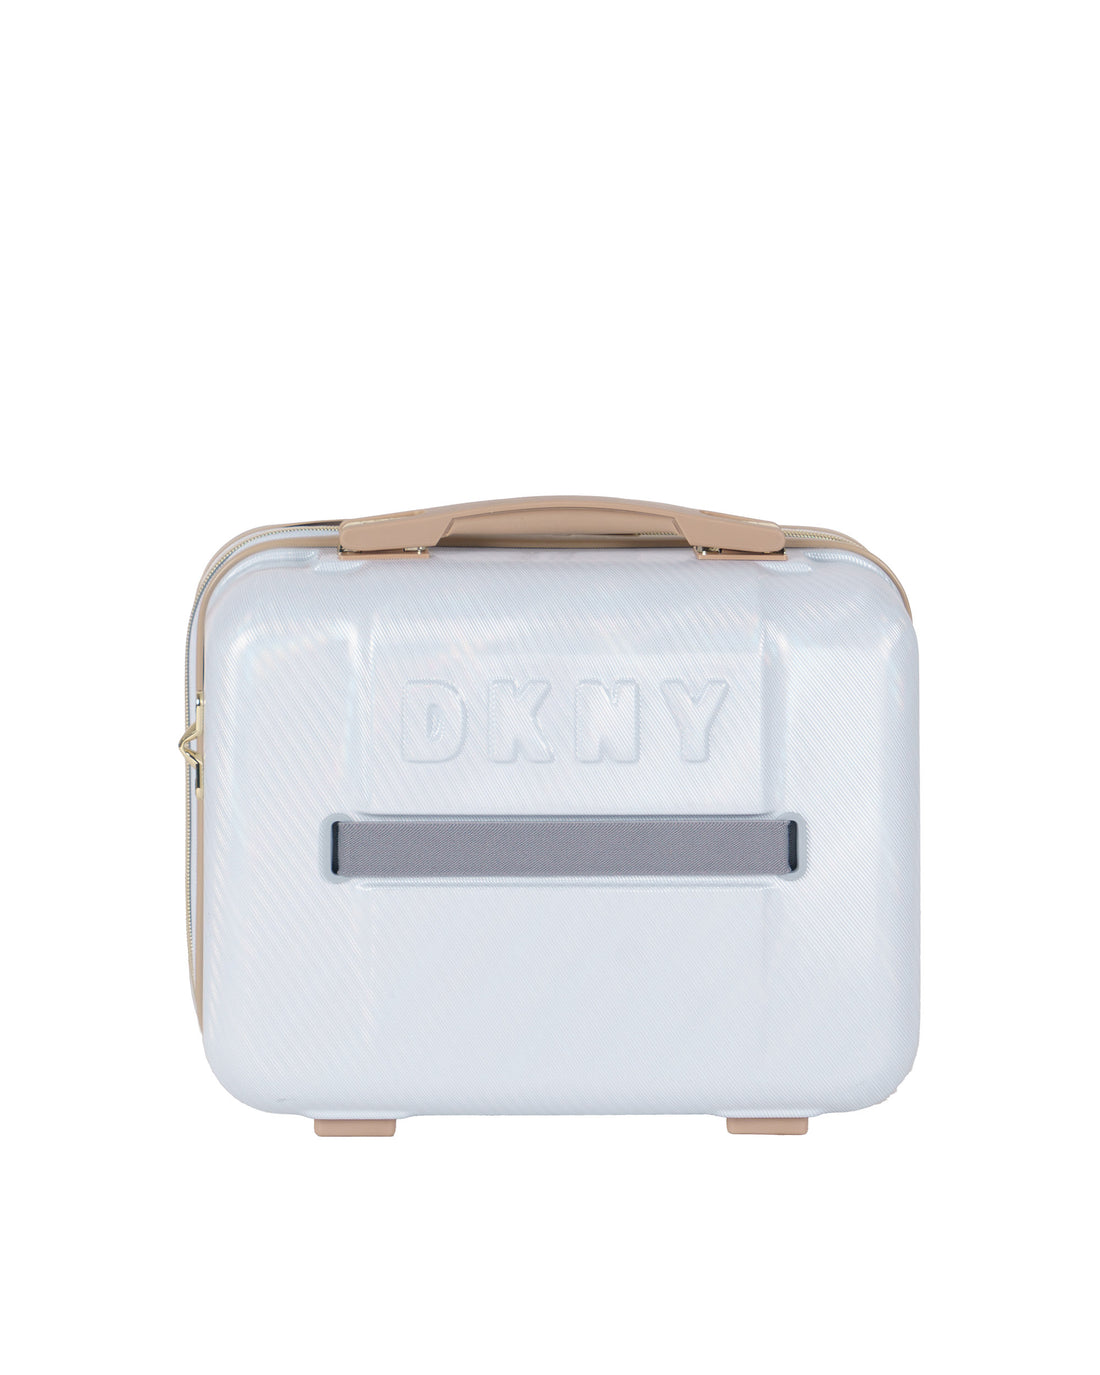 DKNY White Beauty Case